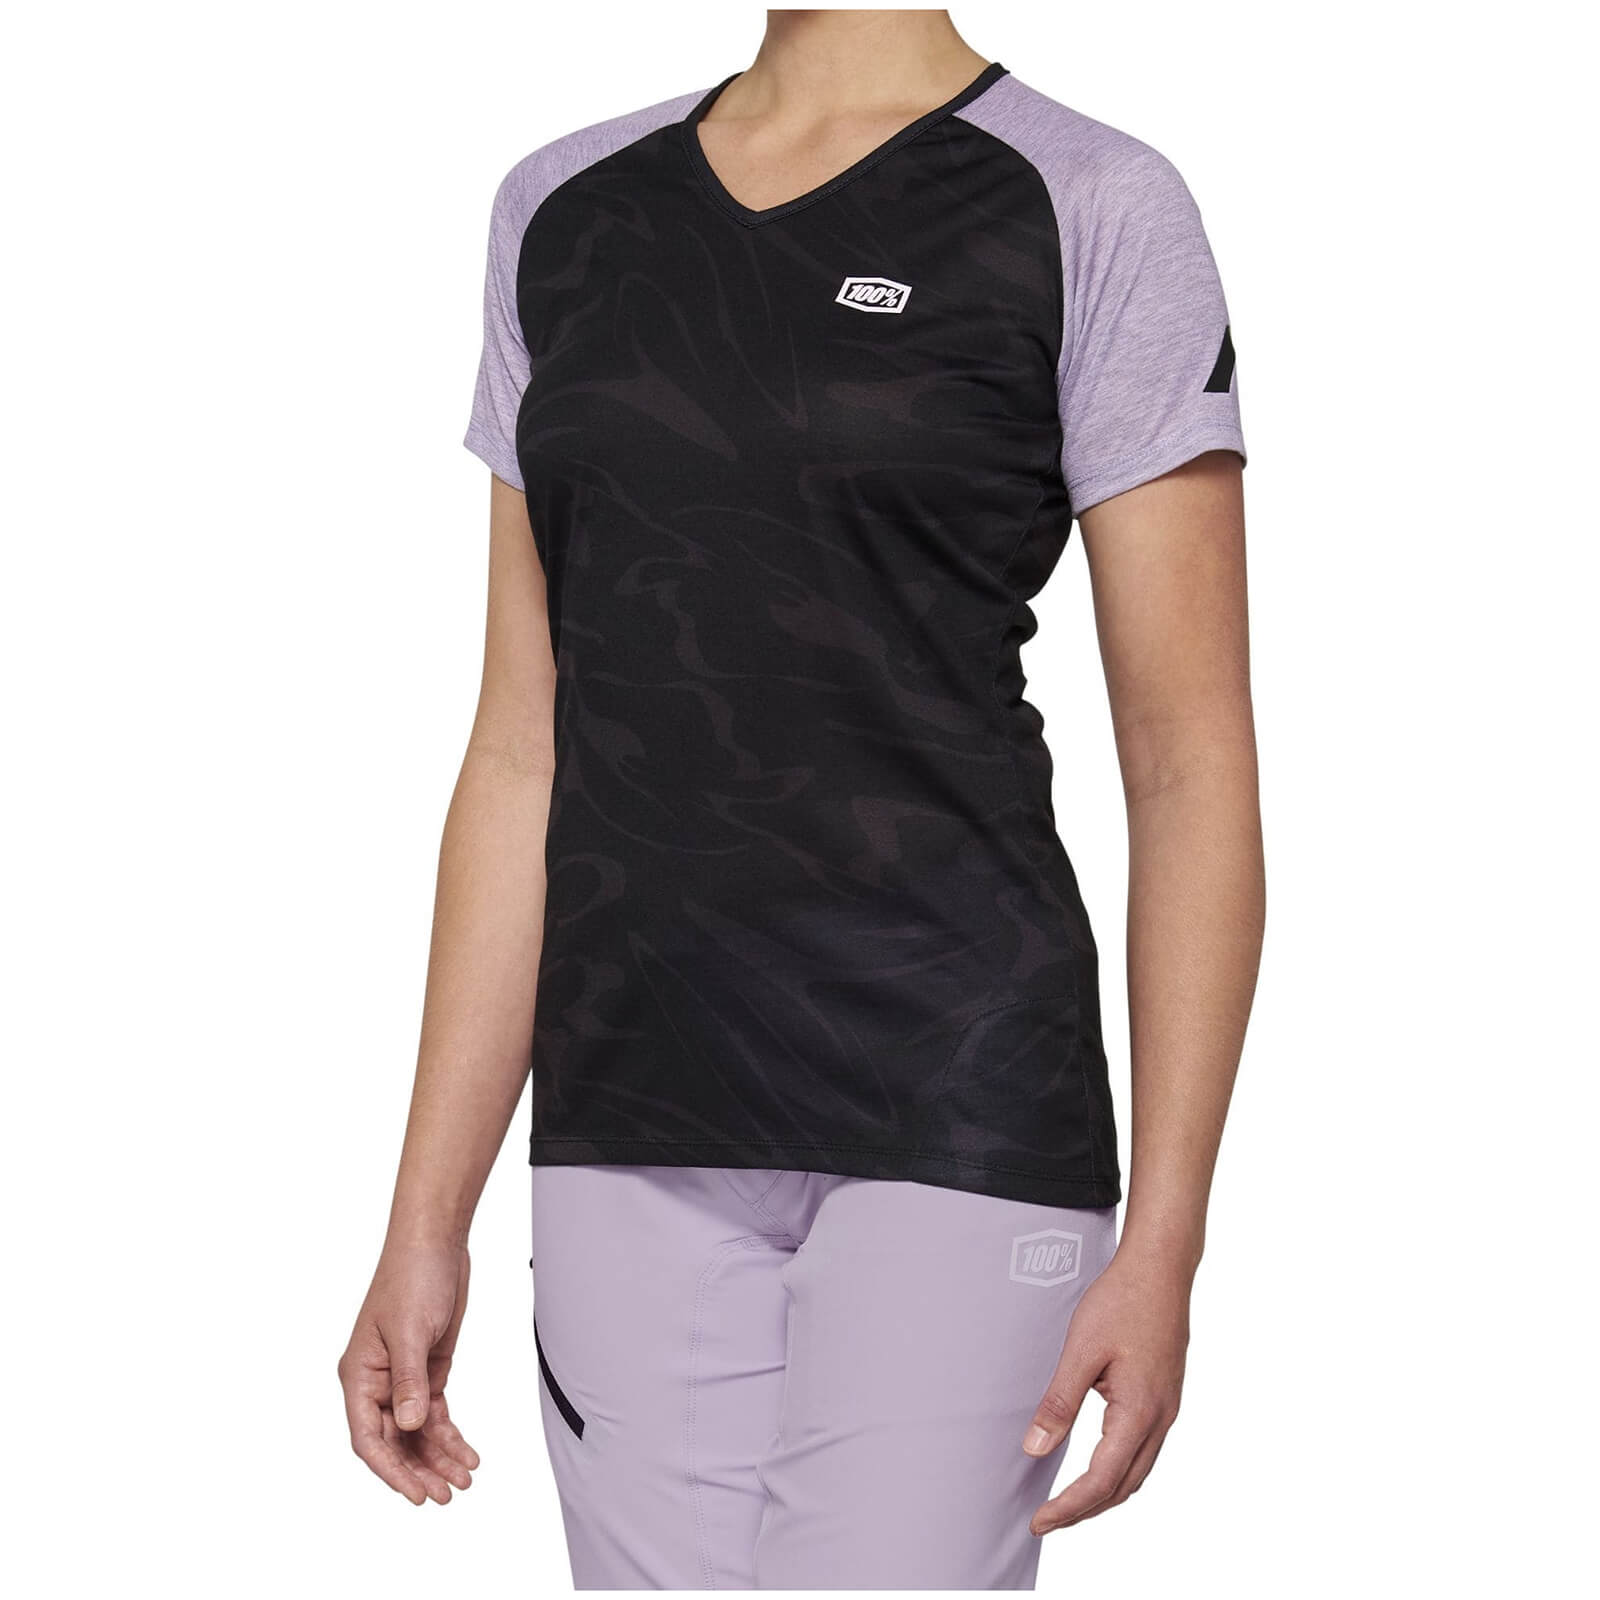 100% Women's Airmatic MTB Jersey - M - Black/Lavender